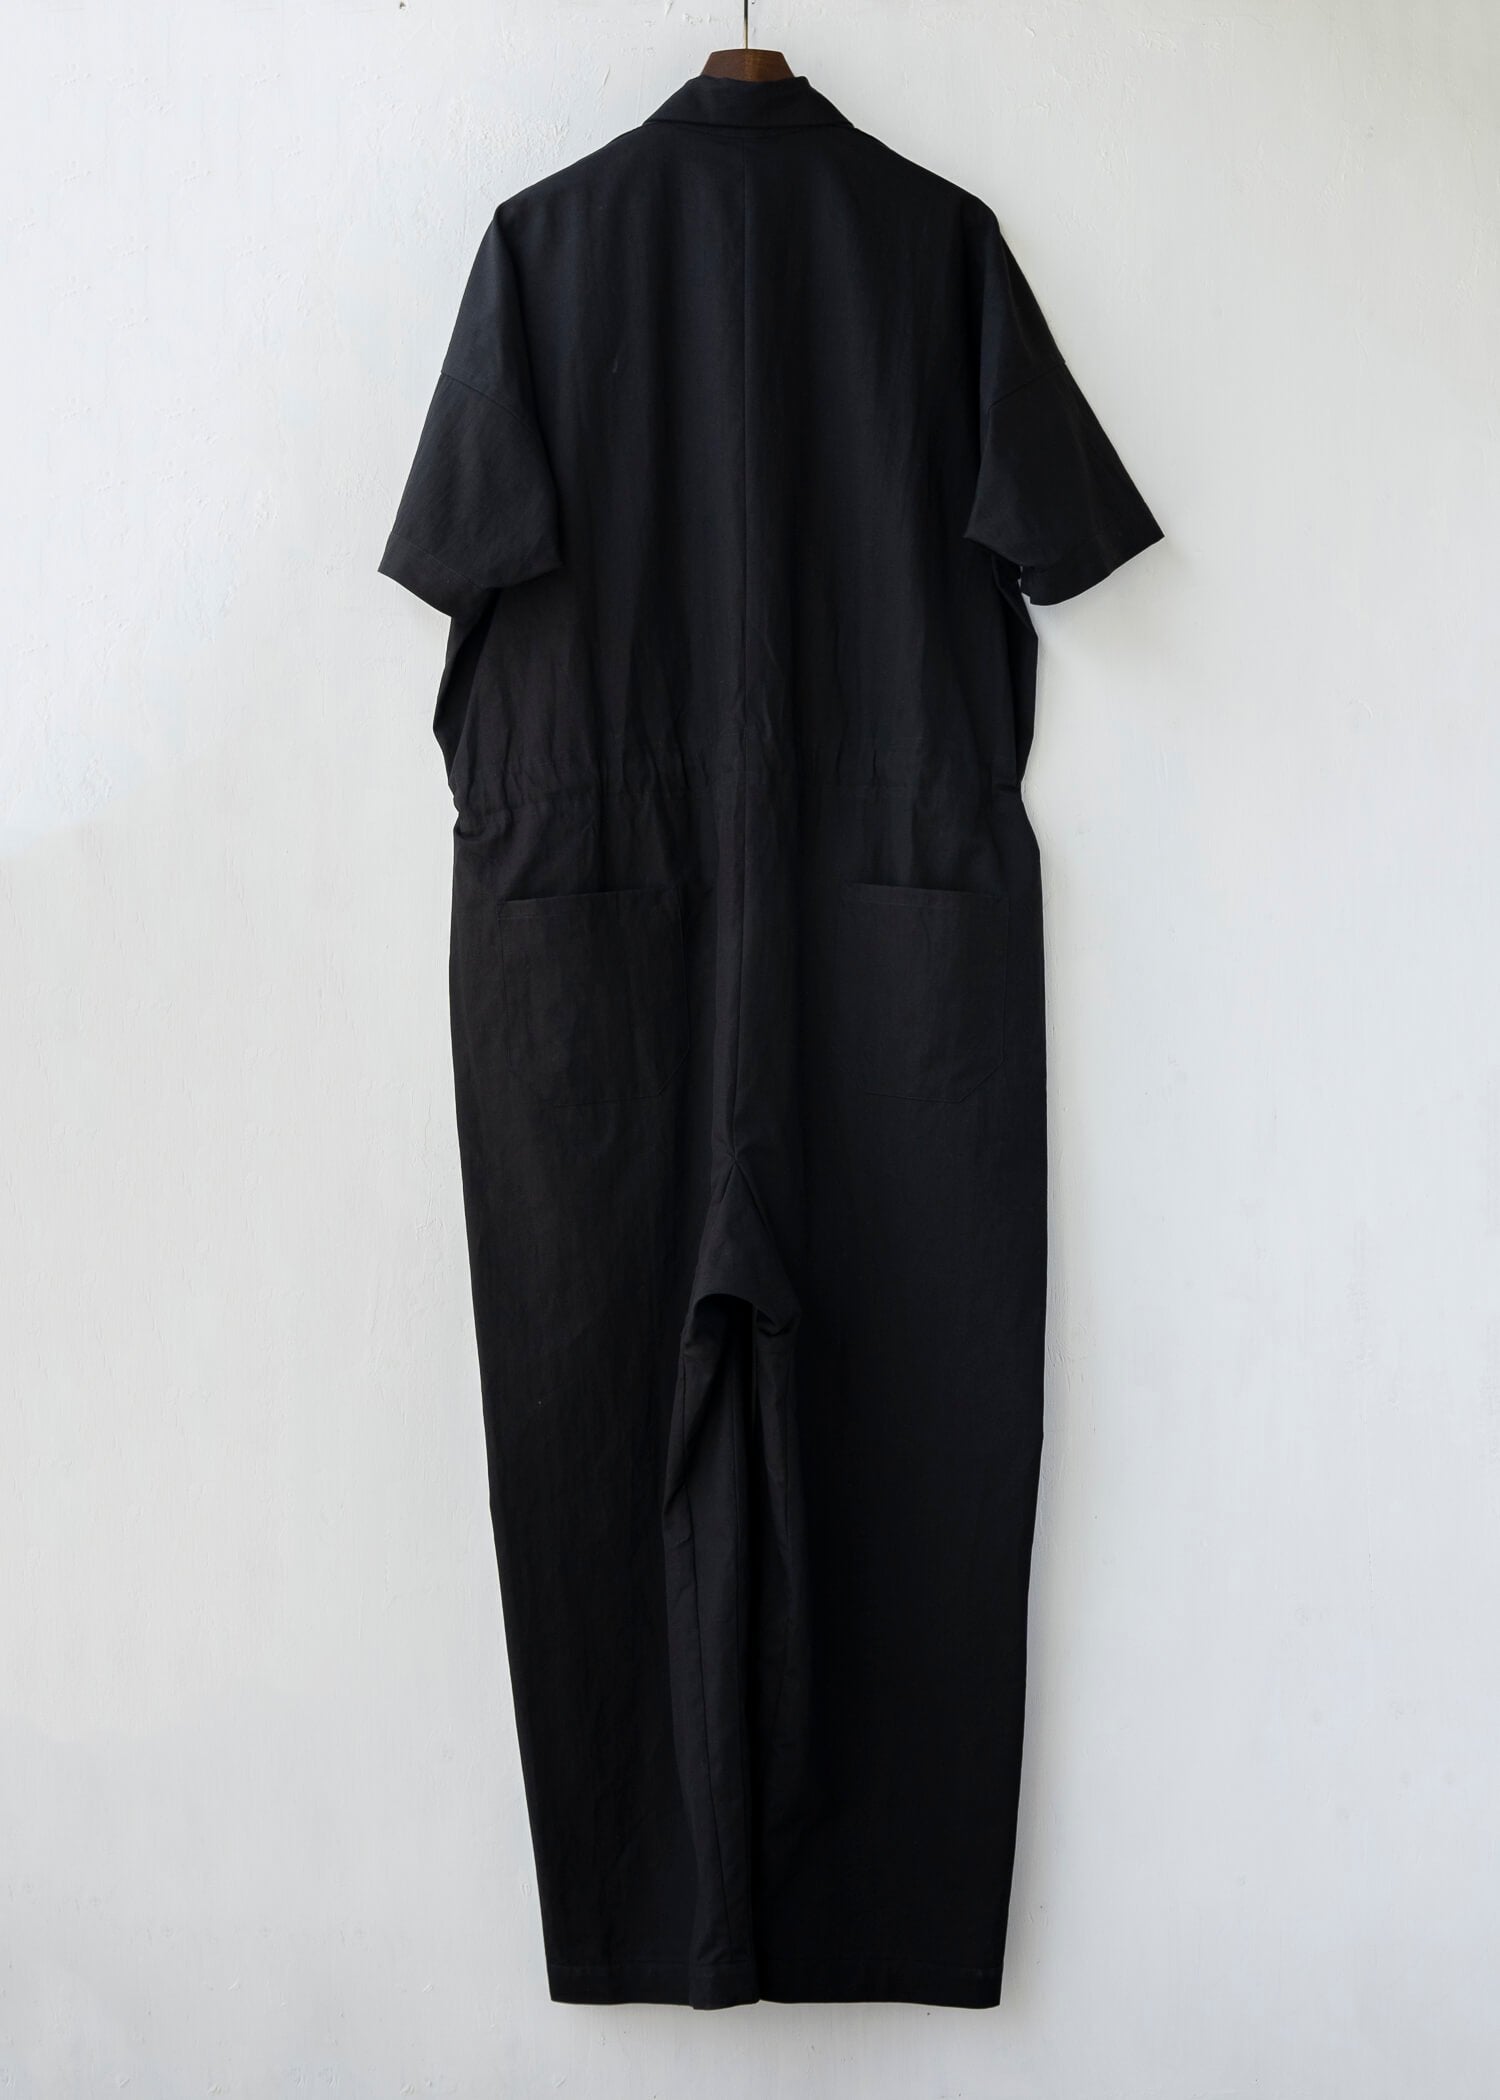 JAN-JAN VAN ESSCHE / "JUMPSUIT#9" 短袖连身裤 / 黑色 / DENSE TWILL